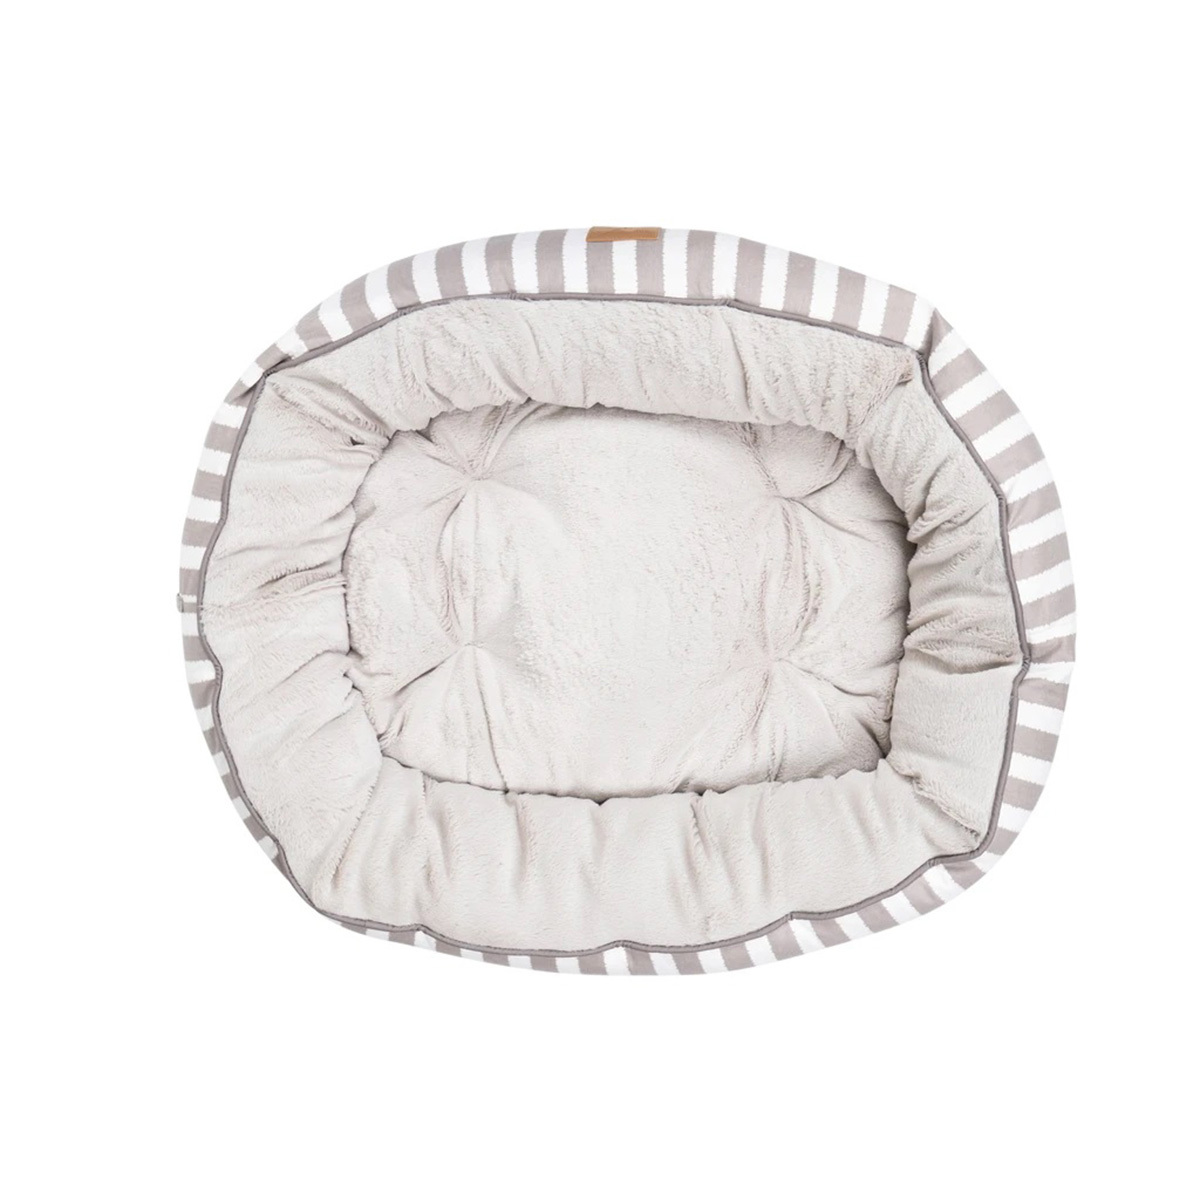 Mog & Bone 4 Seasons Reversible Dog Bed - Latte Hamptons Stripe image 1